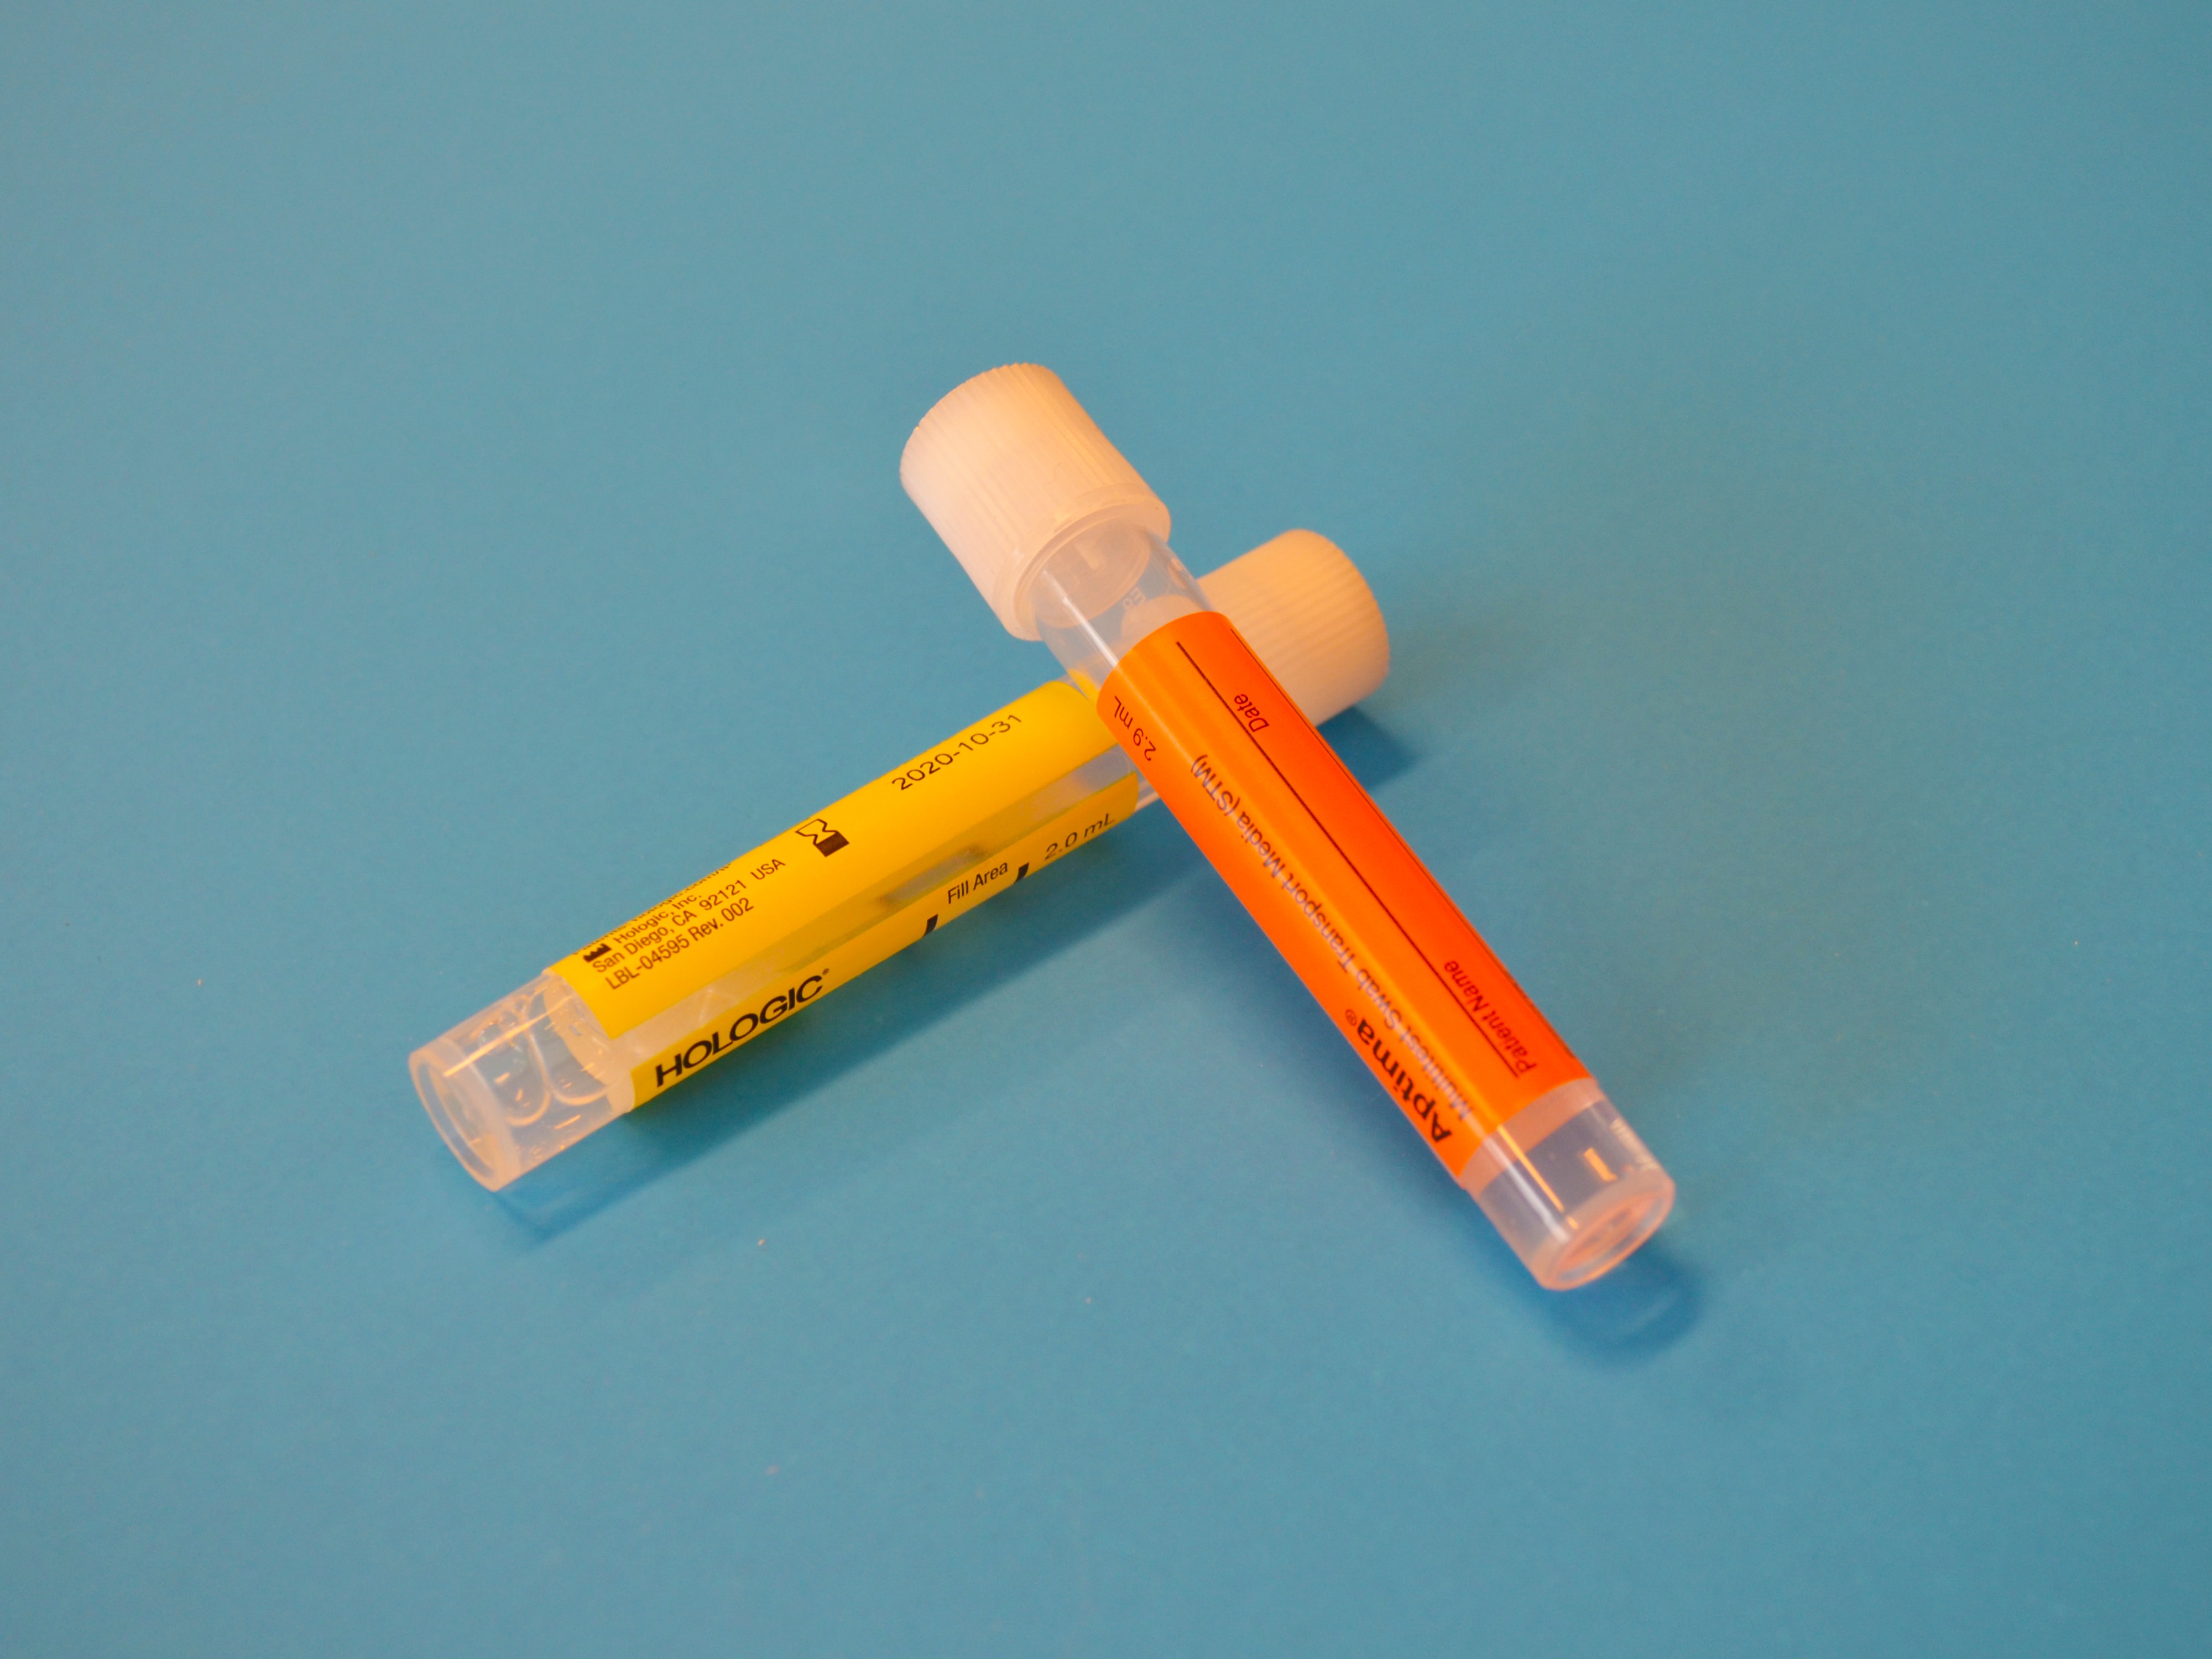 Transport tubes for urine and swabs. Hologic Aptima. Laboratory testing; image by Testalize.me, via Unsplash.com.